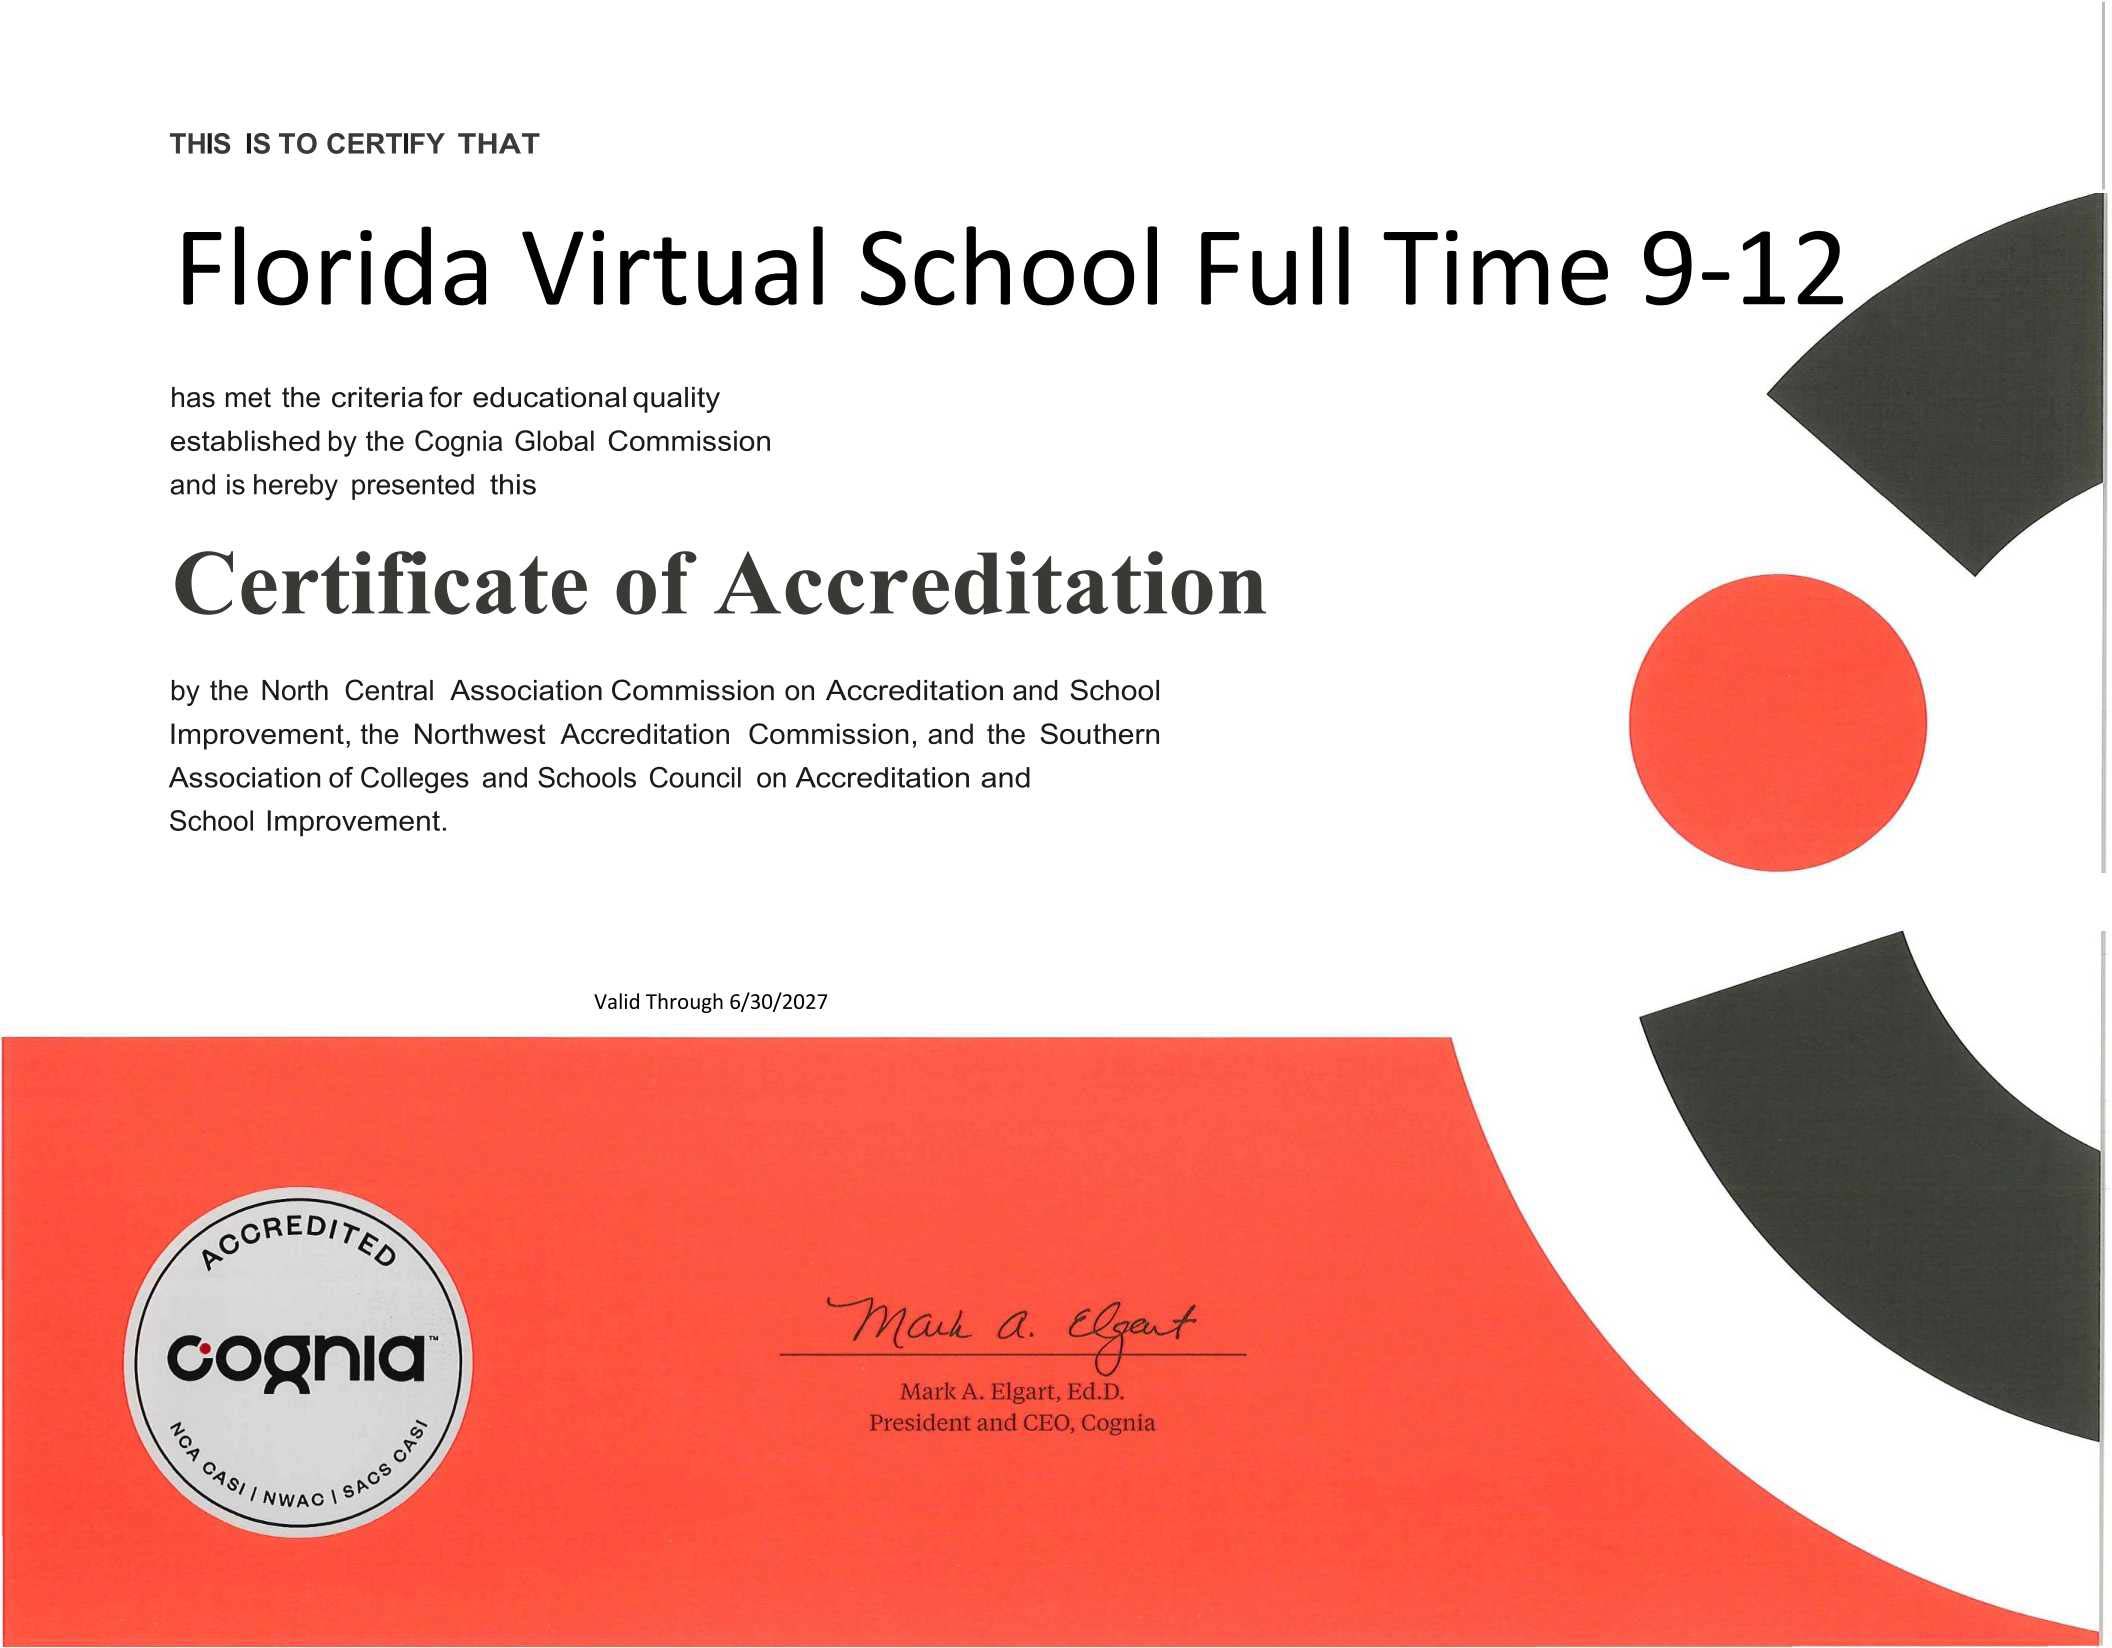 Florida Virtual School Full Time 9-12 Certificate of Accreditation